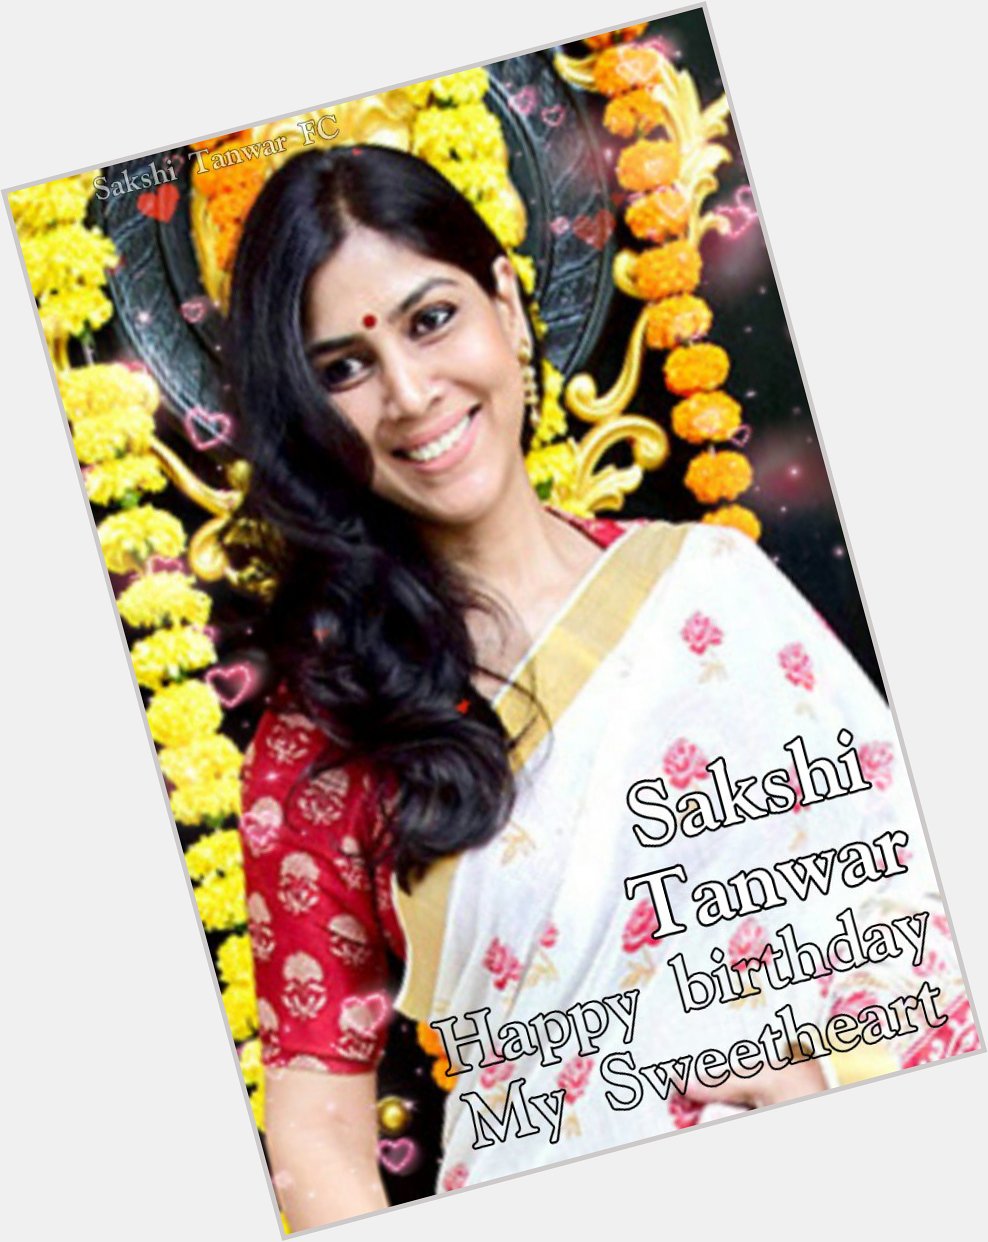 Happy birthday Sakshi tanwar 